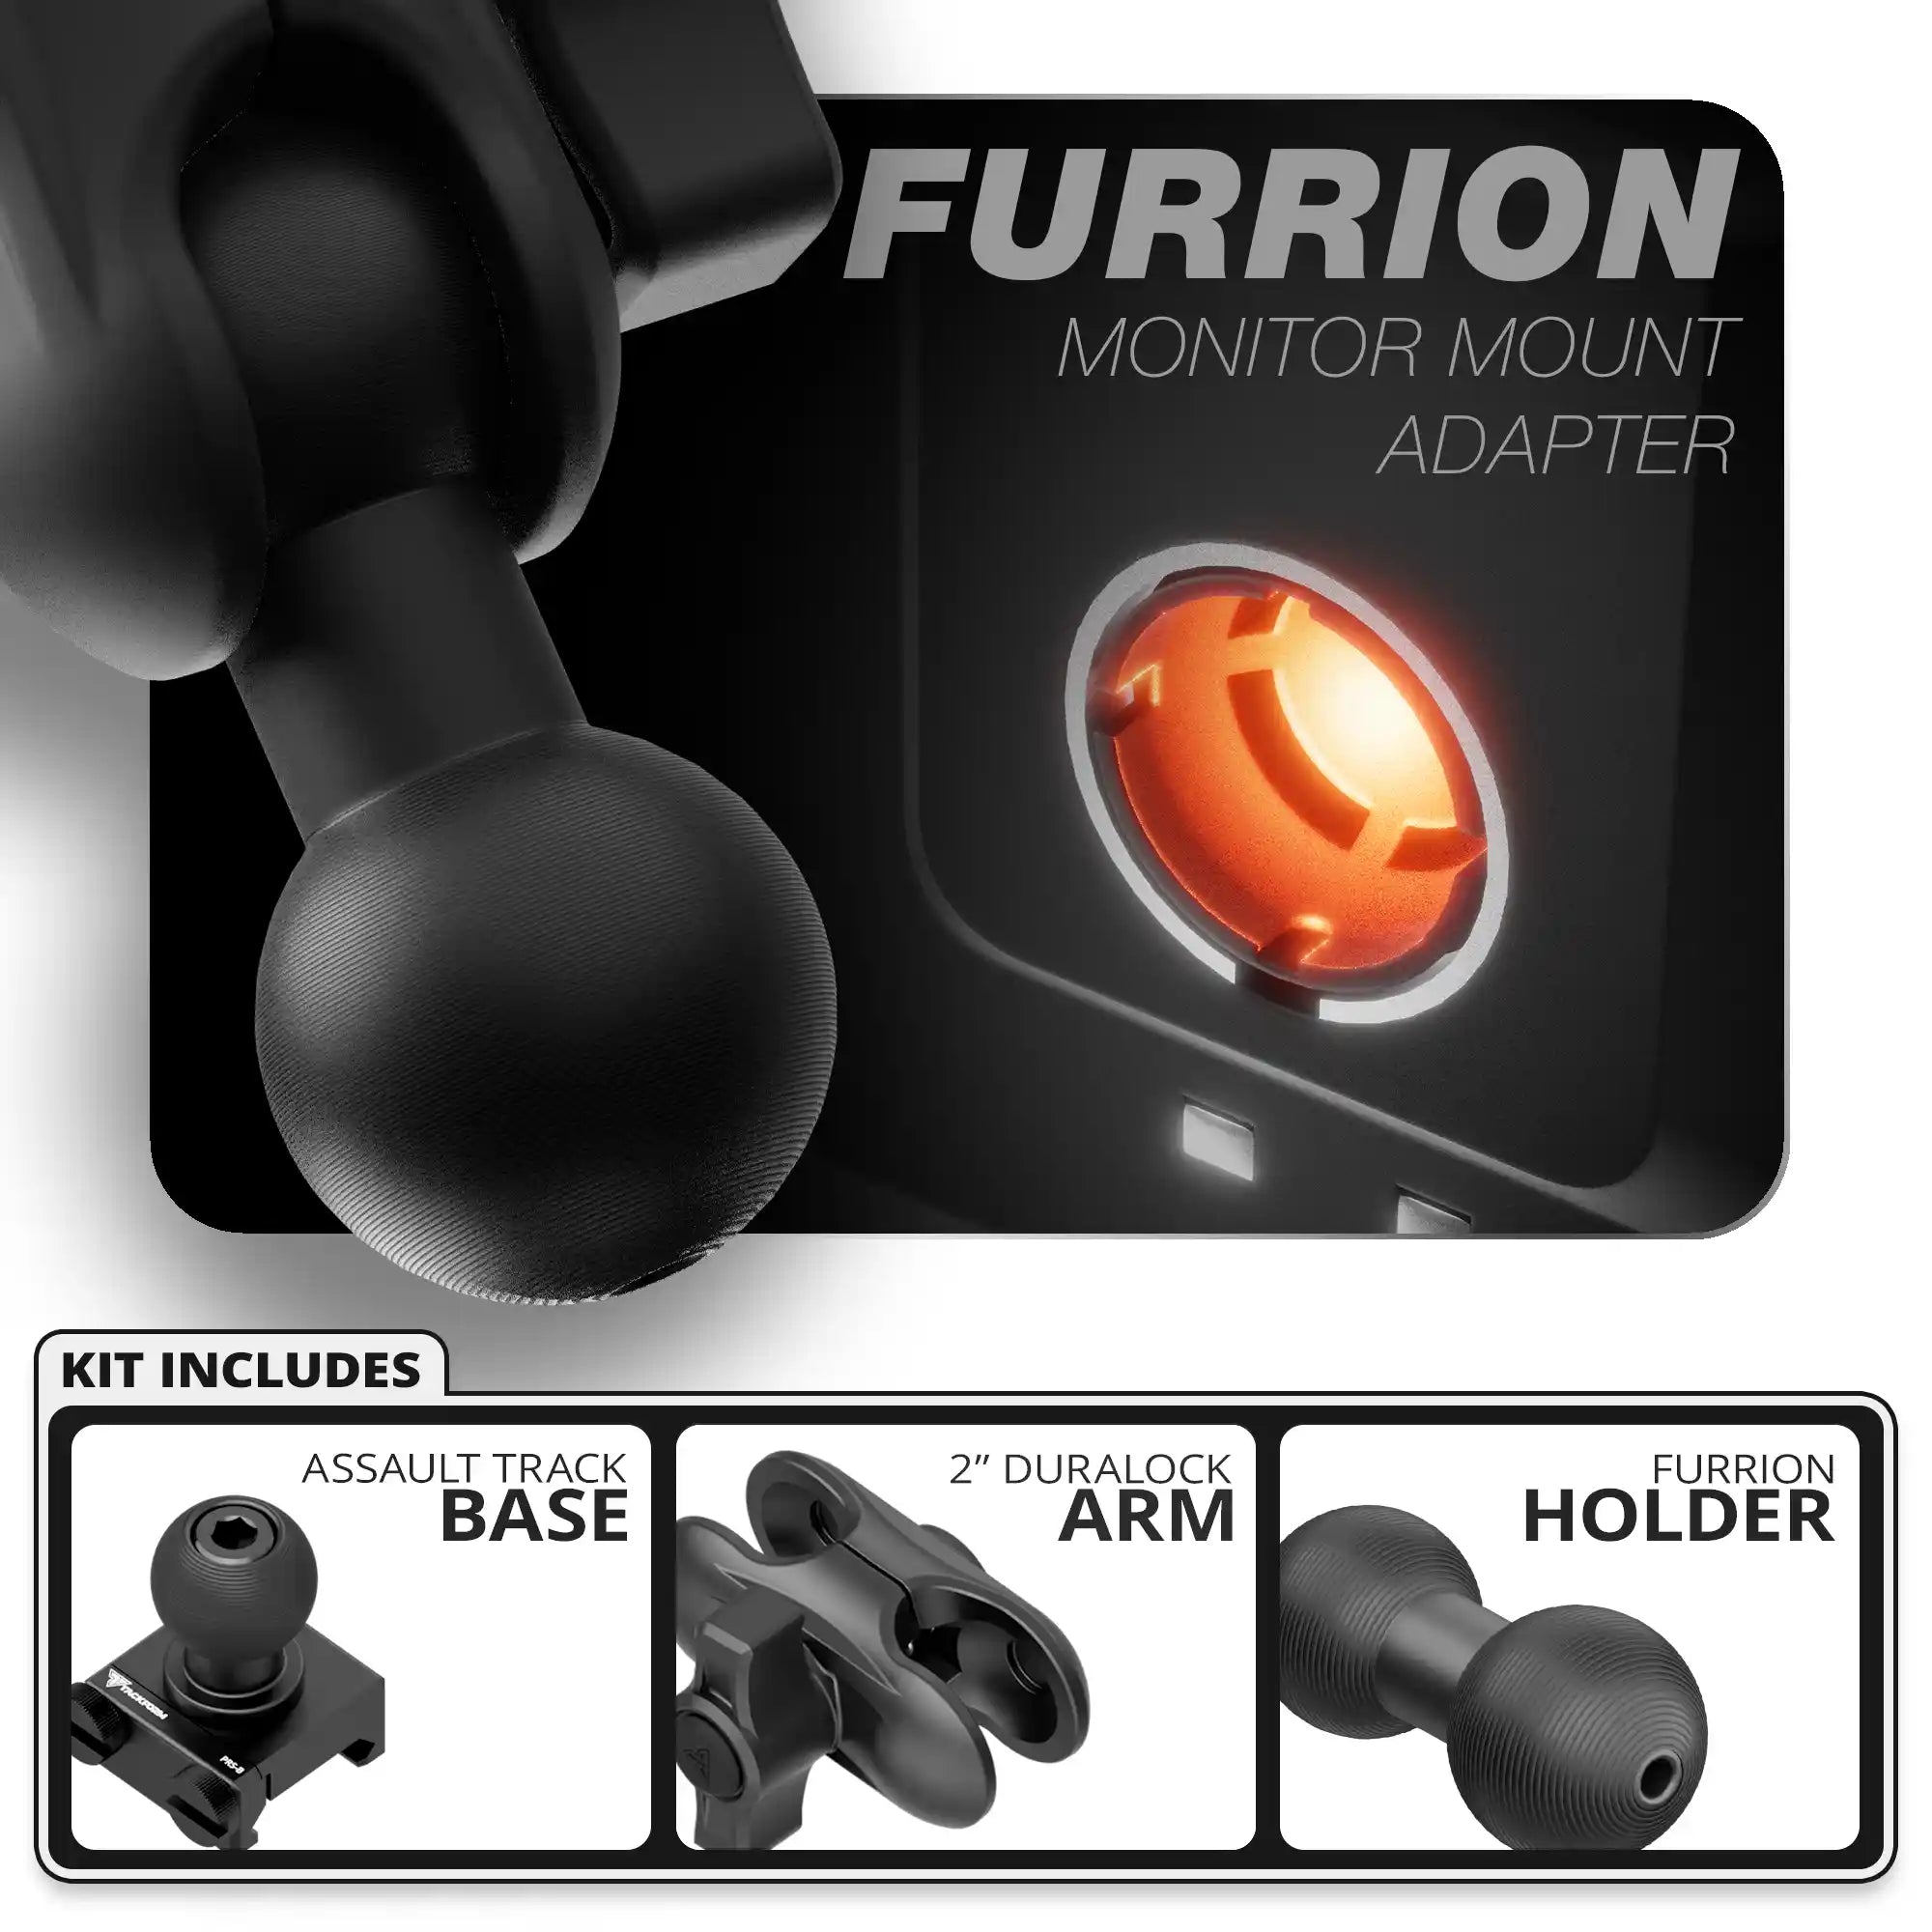 Furrion | Assault Track Base | 2" DuraLock Arm